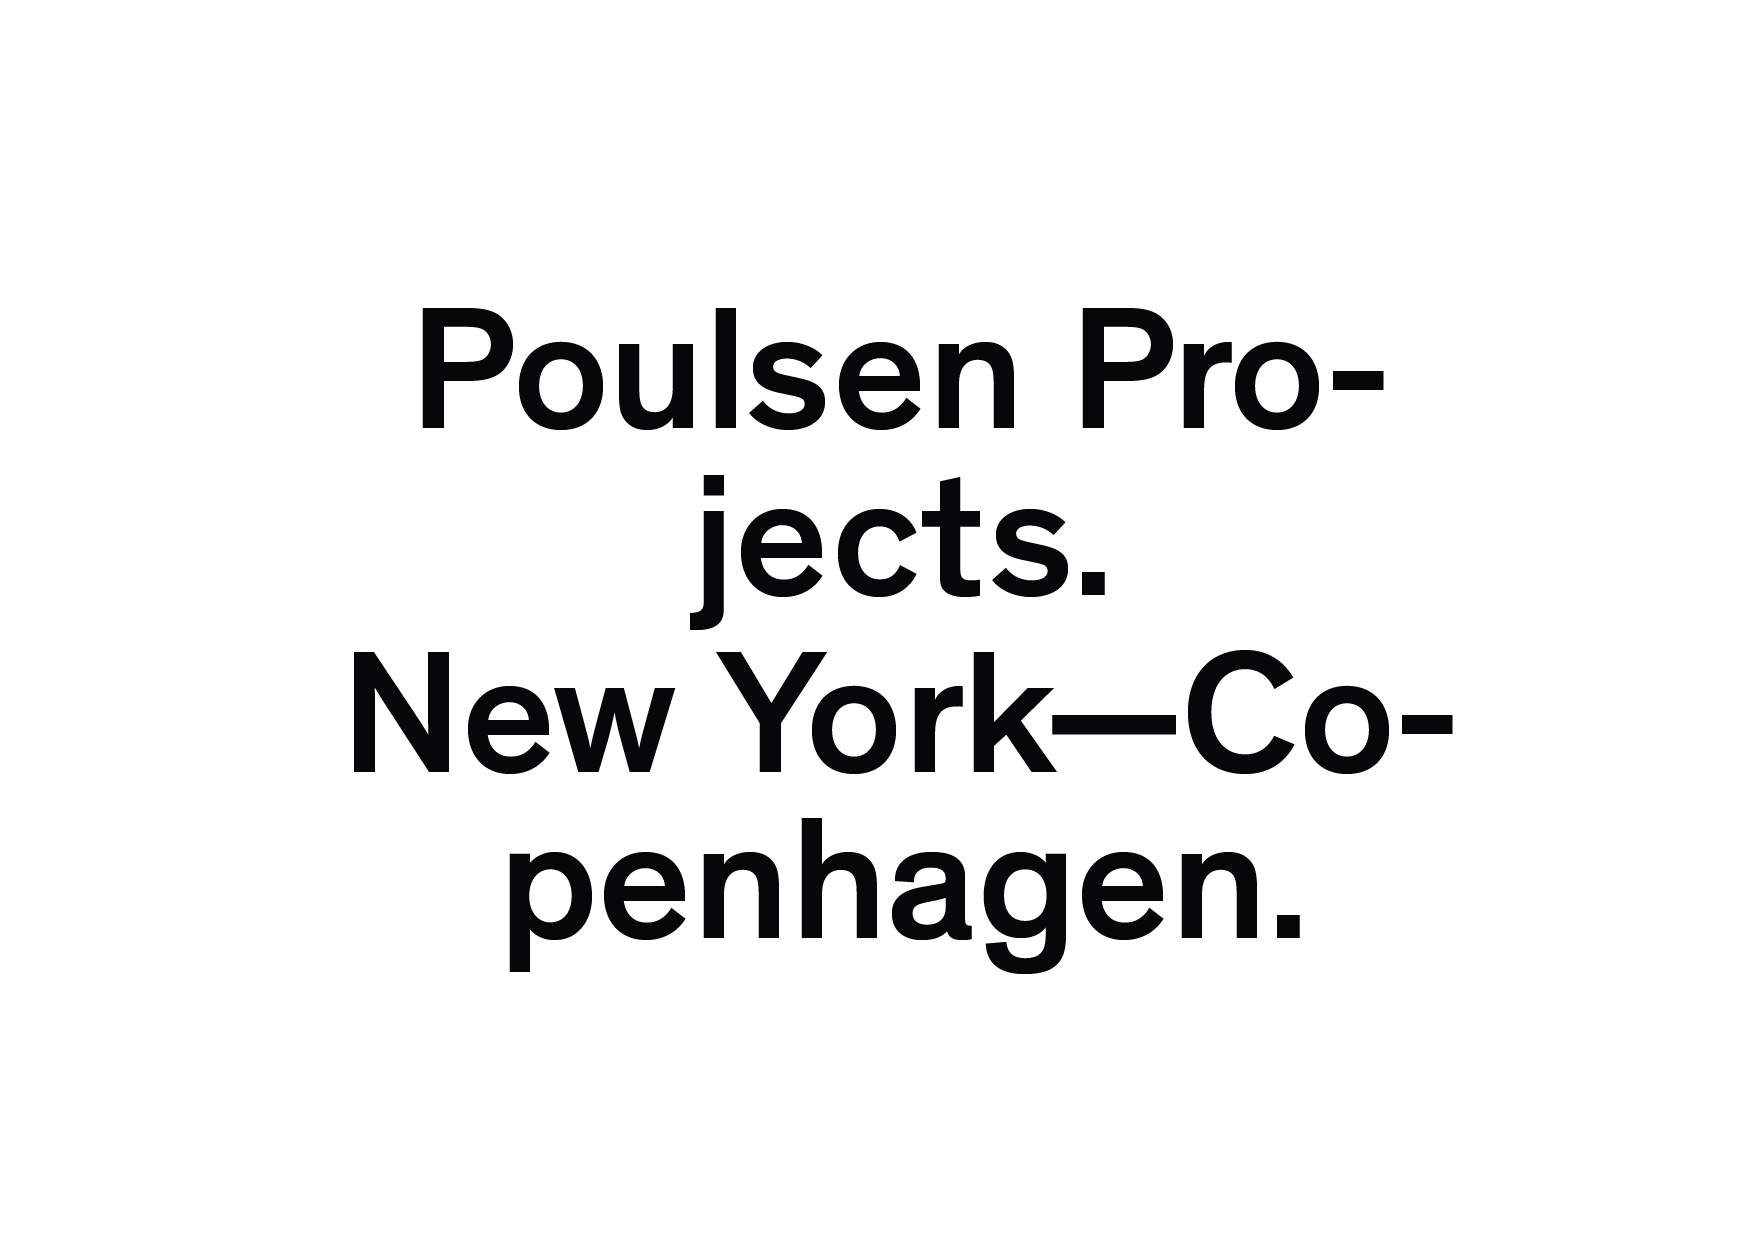 PoulsenProjects_MadsJakobPoulsen_logo_Typography_Multihyphenated2-73